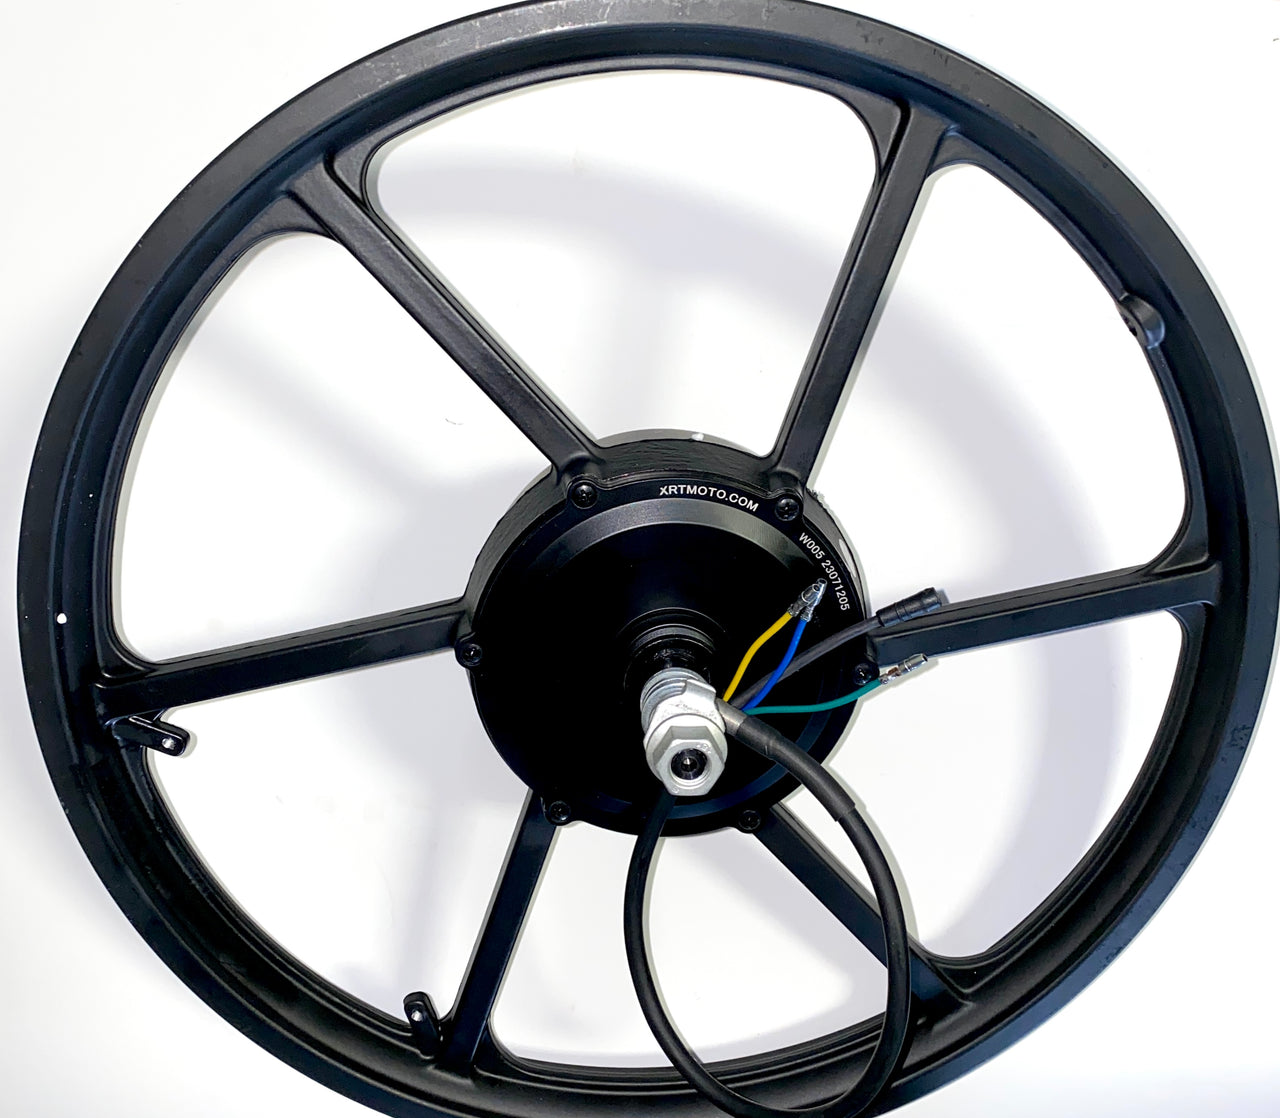 20" Rear Wheel, 48v/500W Hub Motor Assembly | P20-202